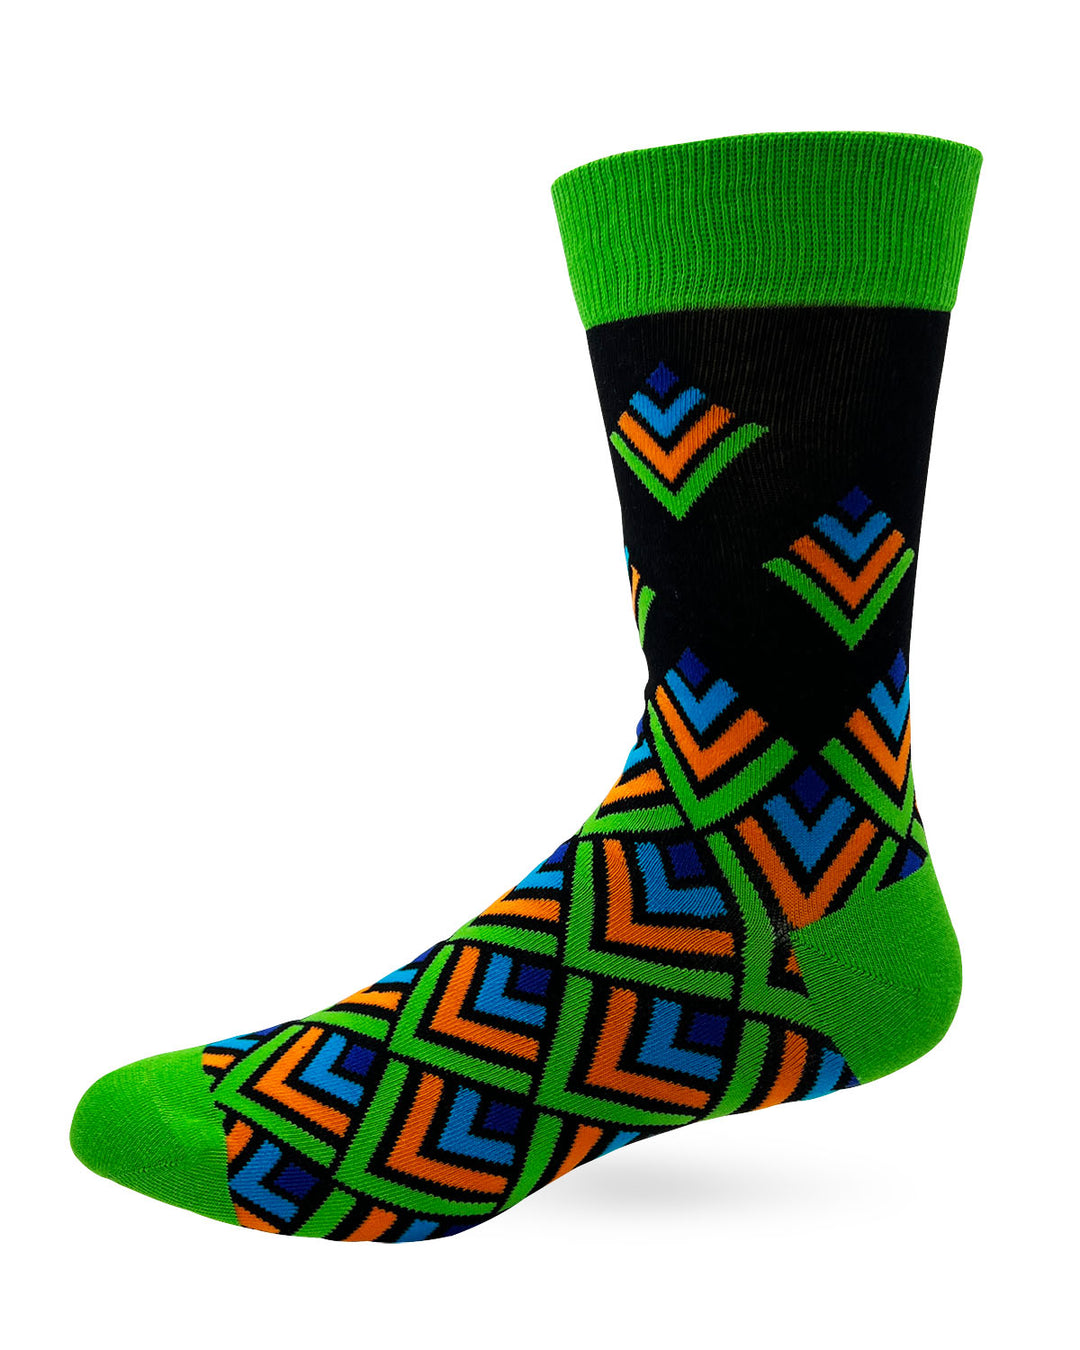 Colorful Men's Novelty Socks